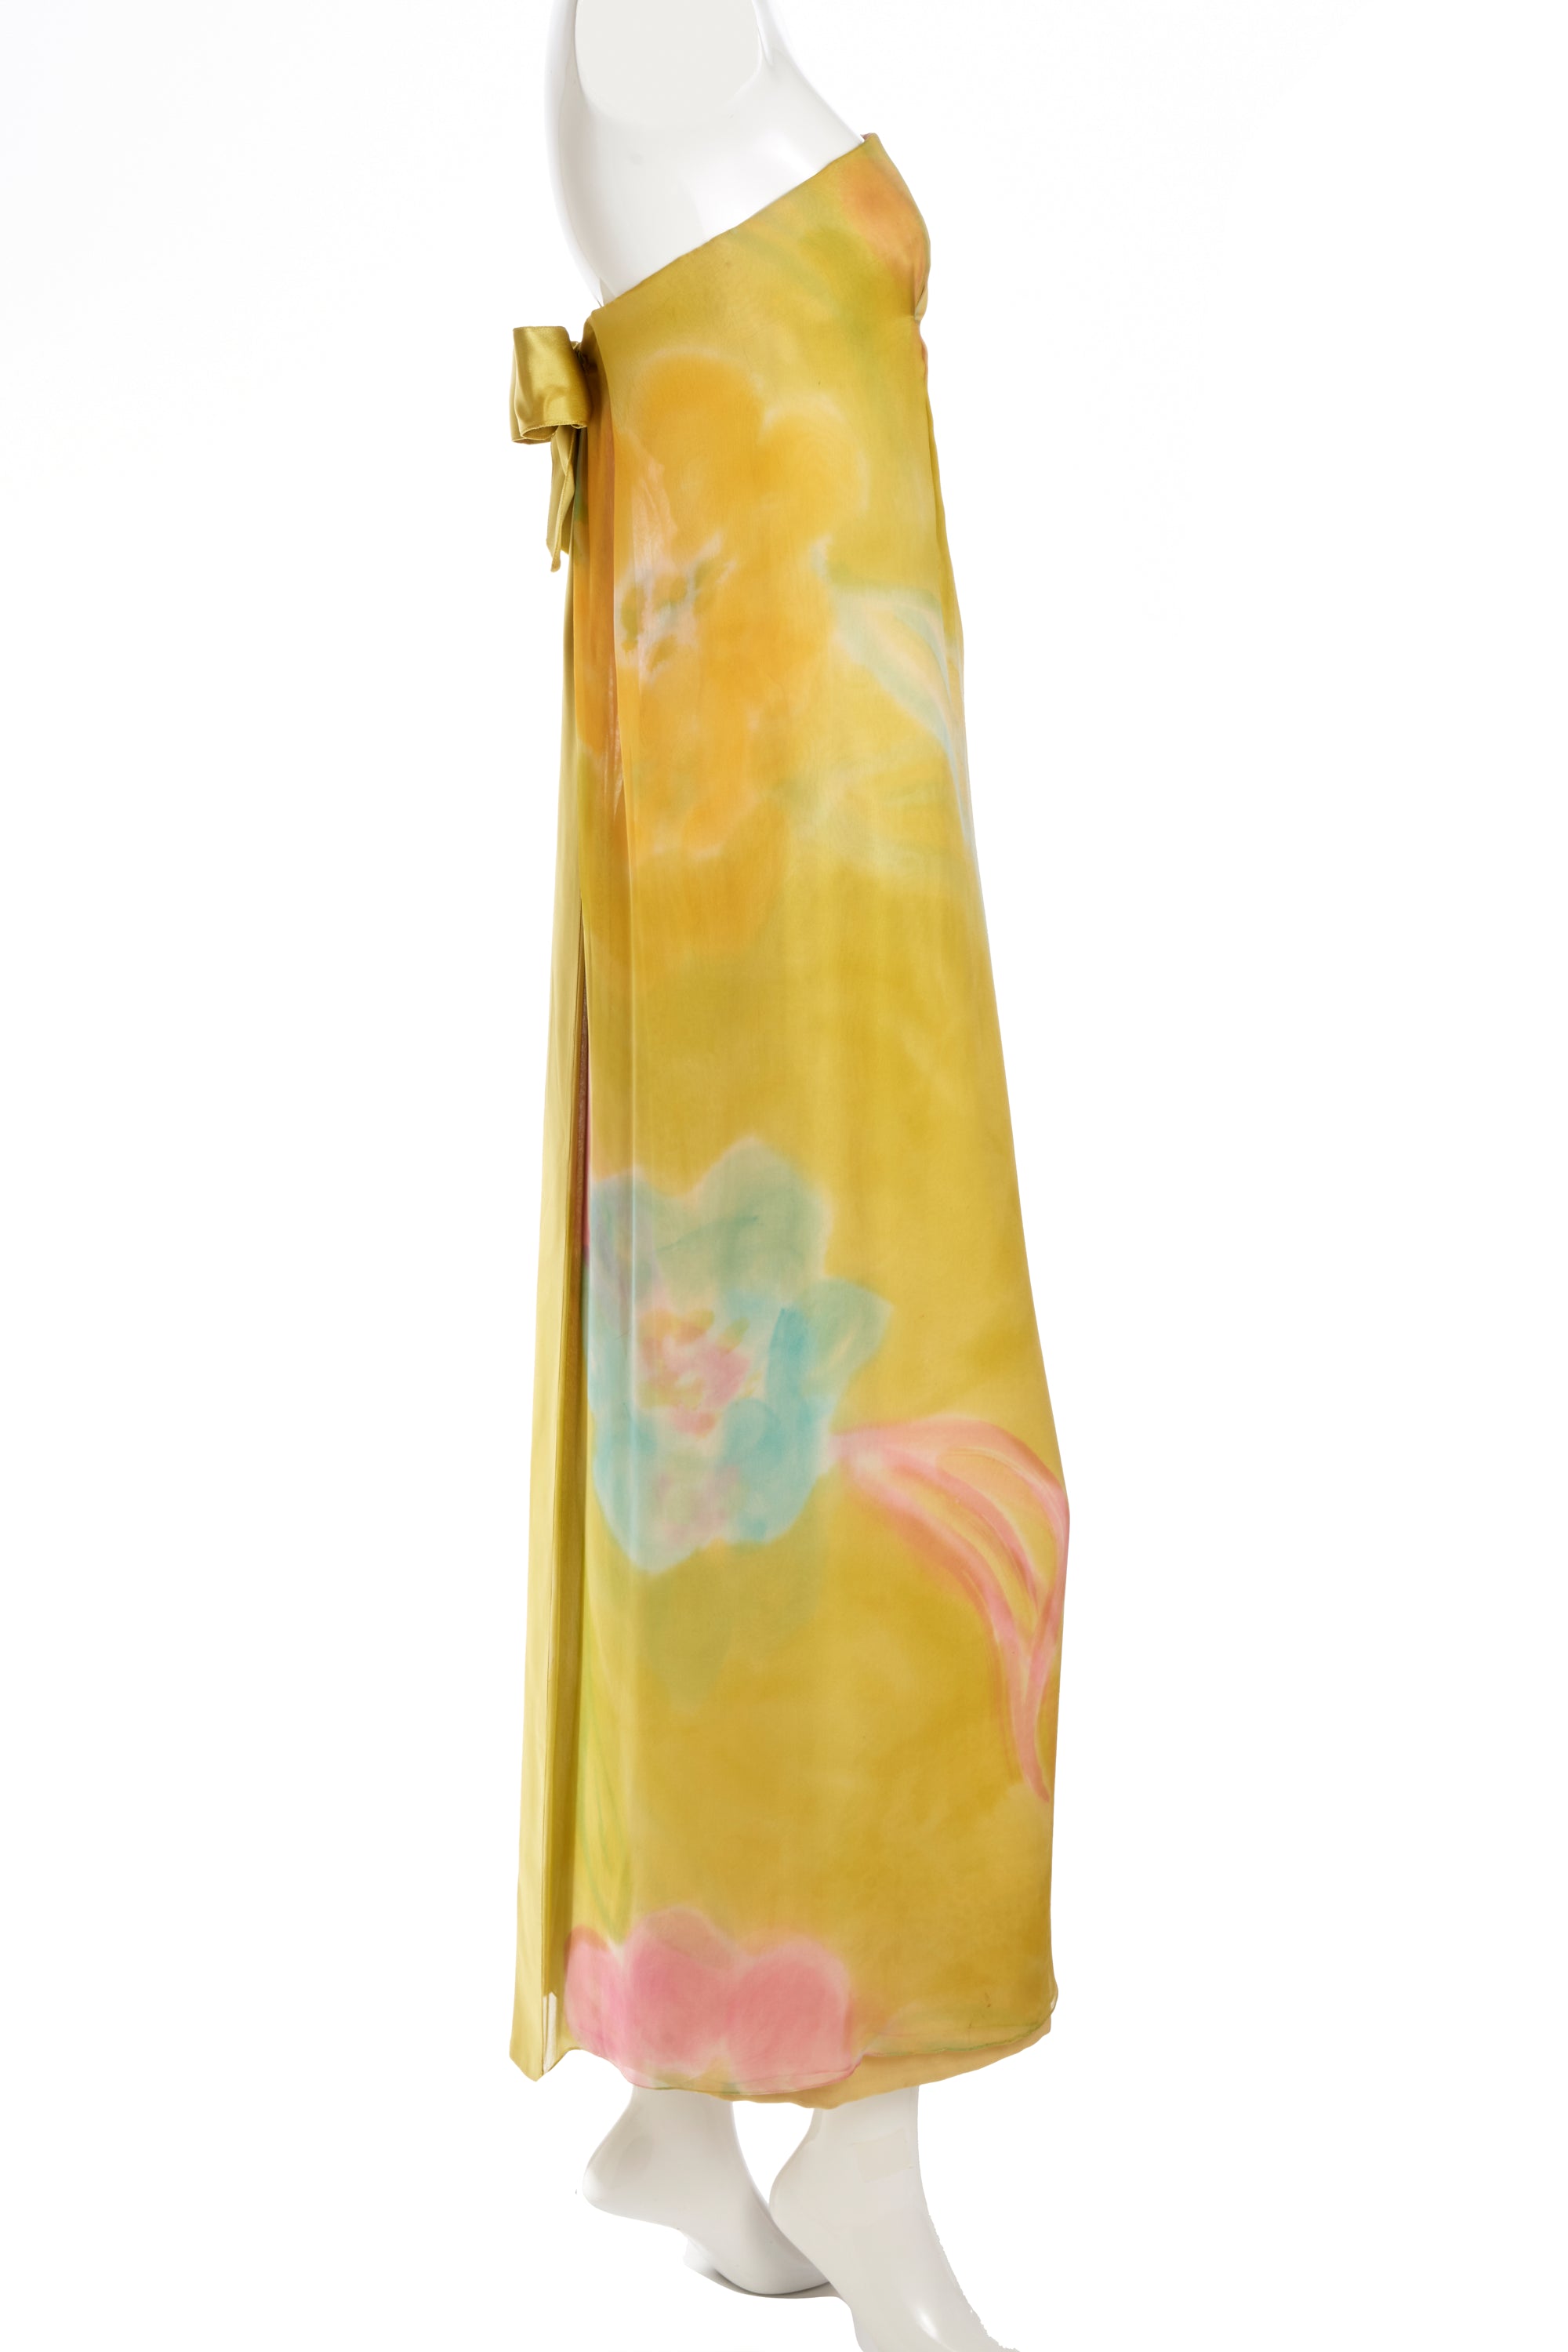 Sarmi Tie Dye Chiffon Strapless Gown 1960s